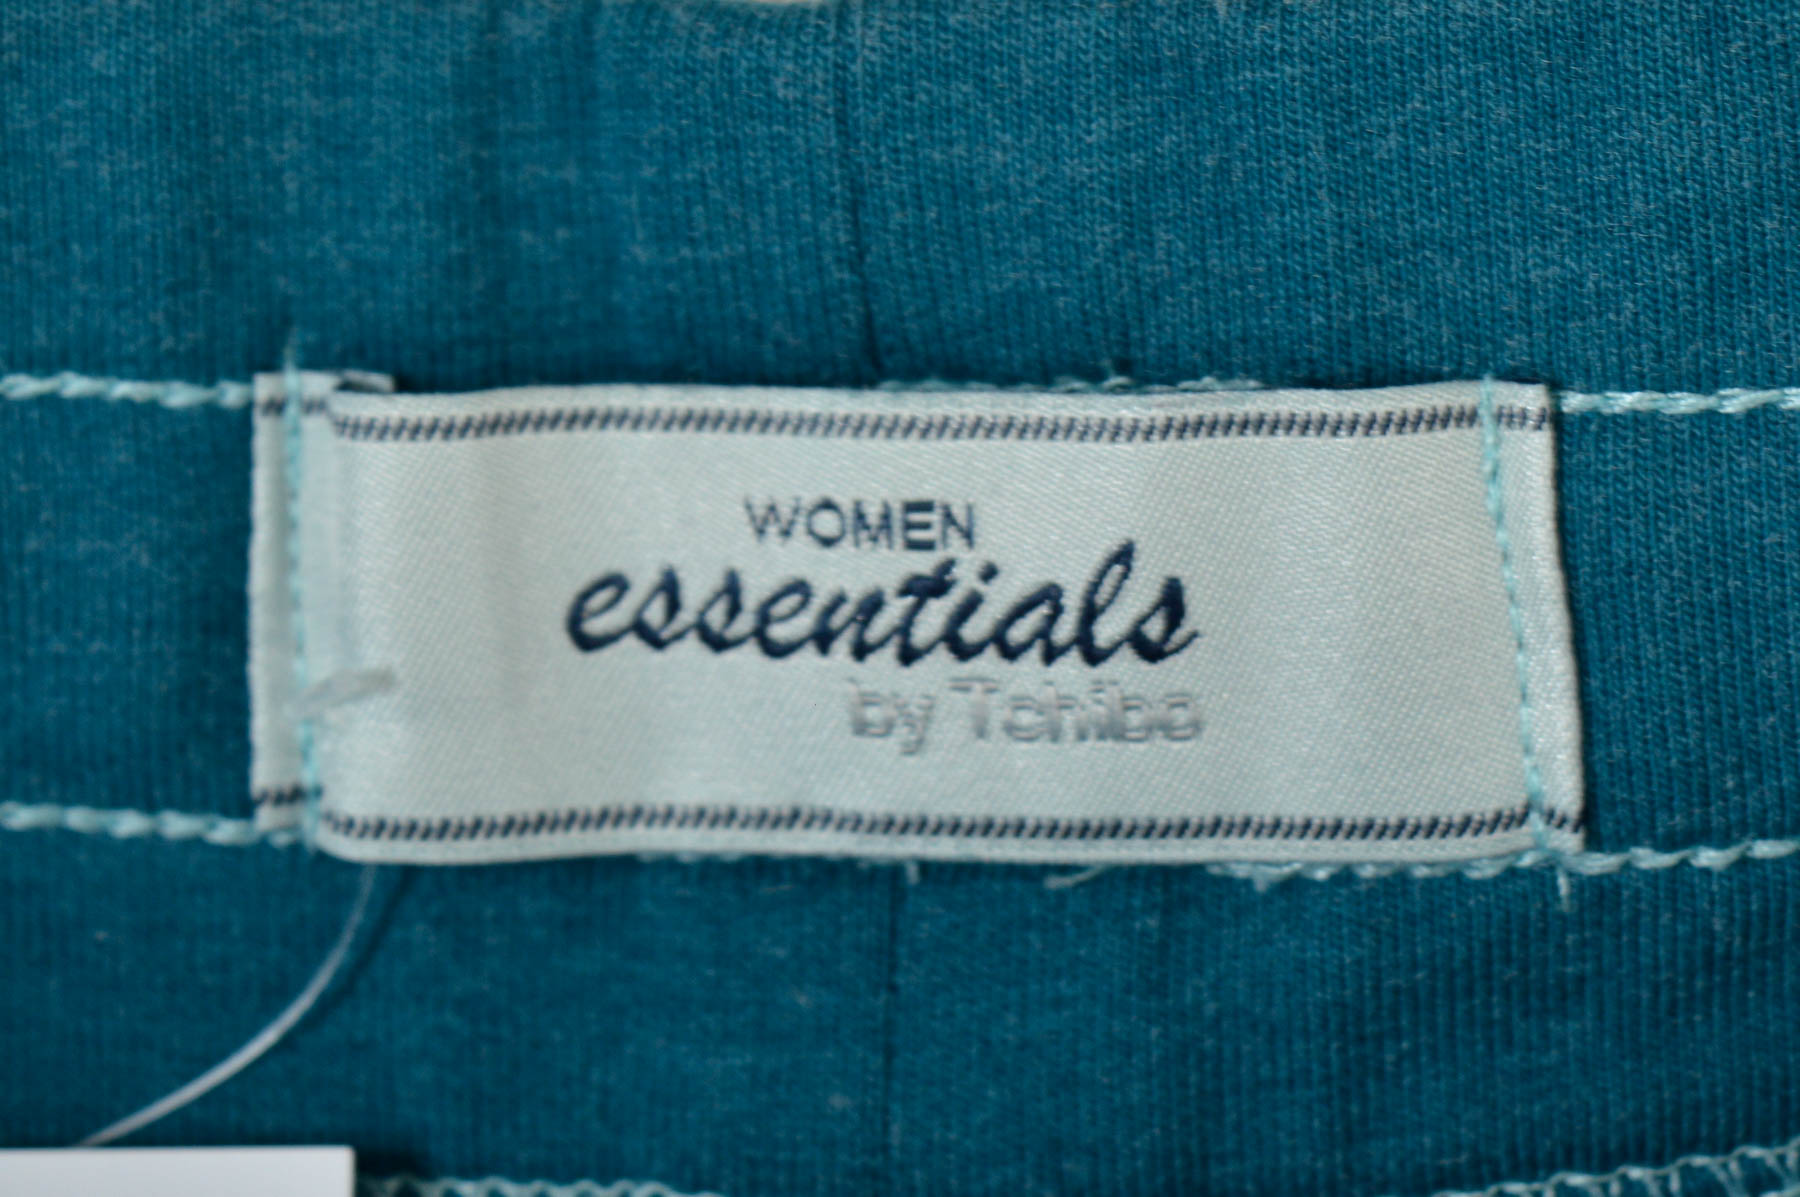 Female shorts - WOMEN essentials by Tchibo - 2